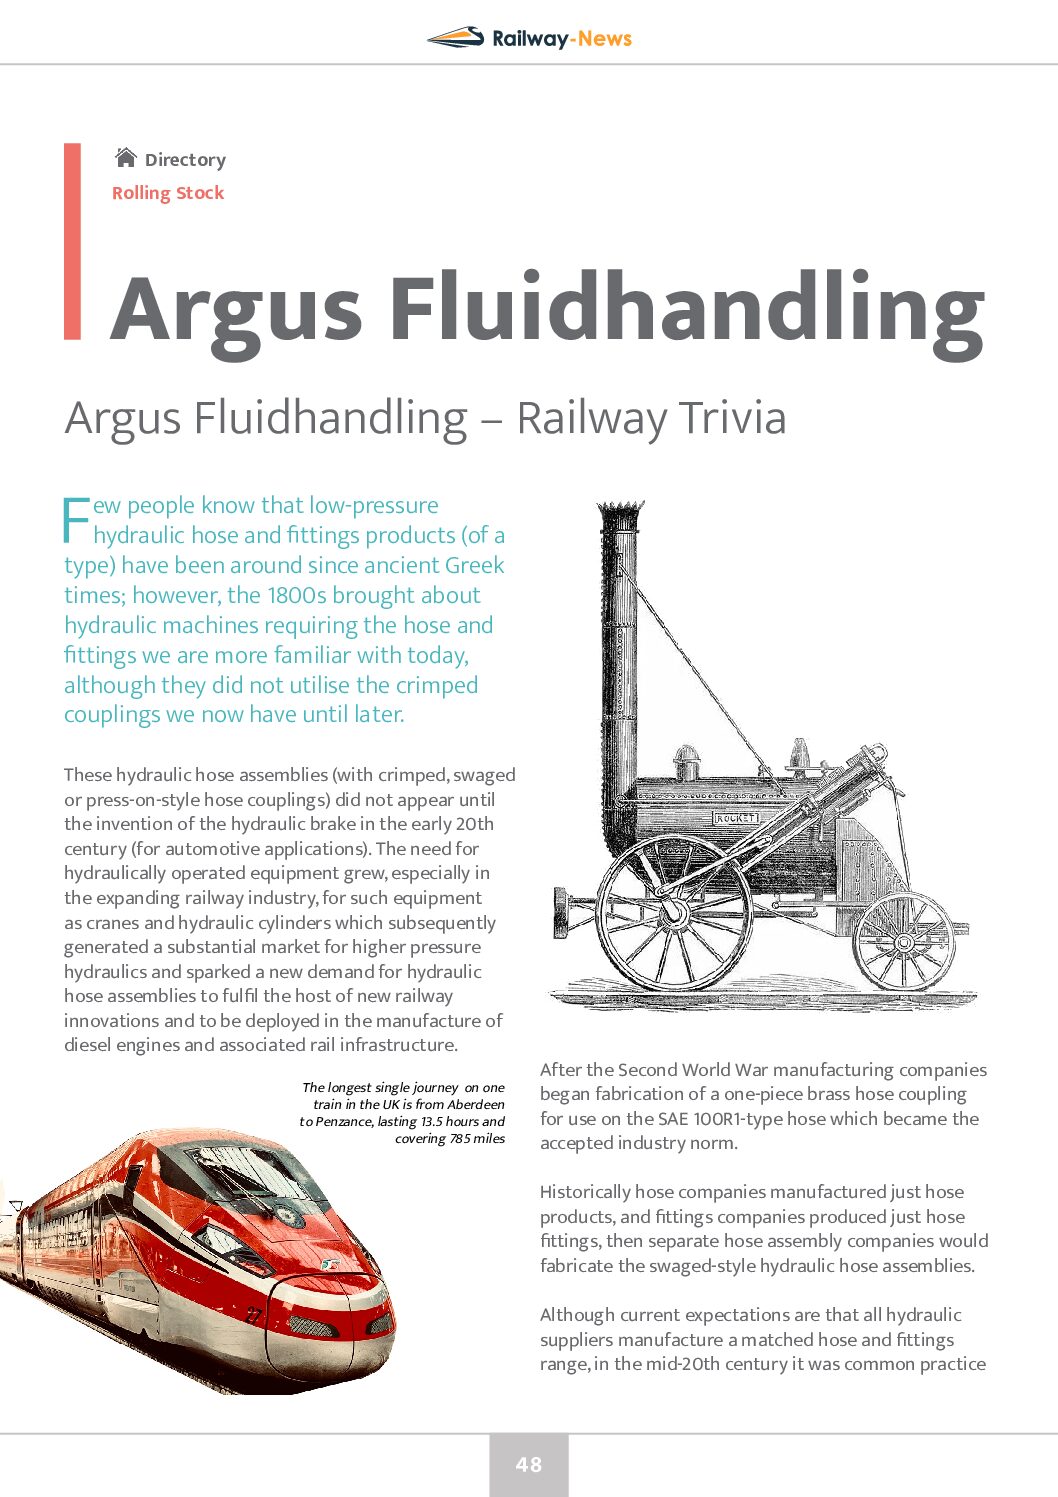 Argus Fluidhandling – Railway Trivia